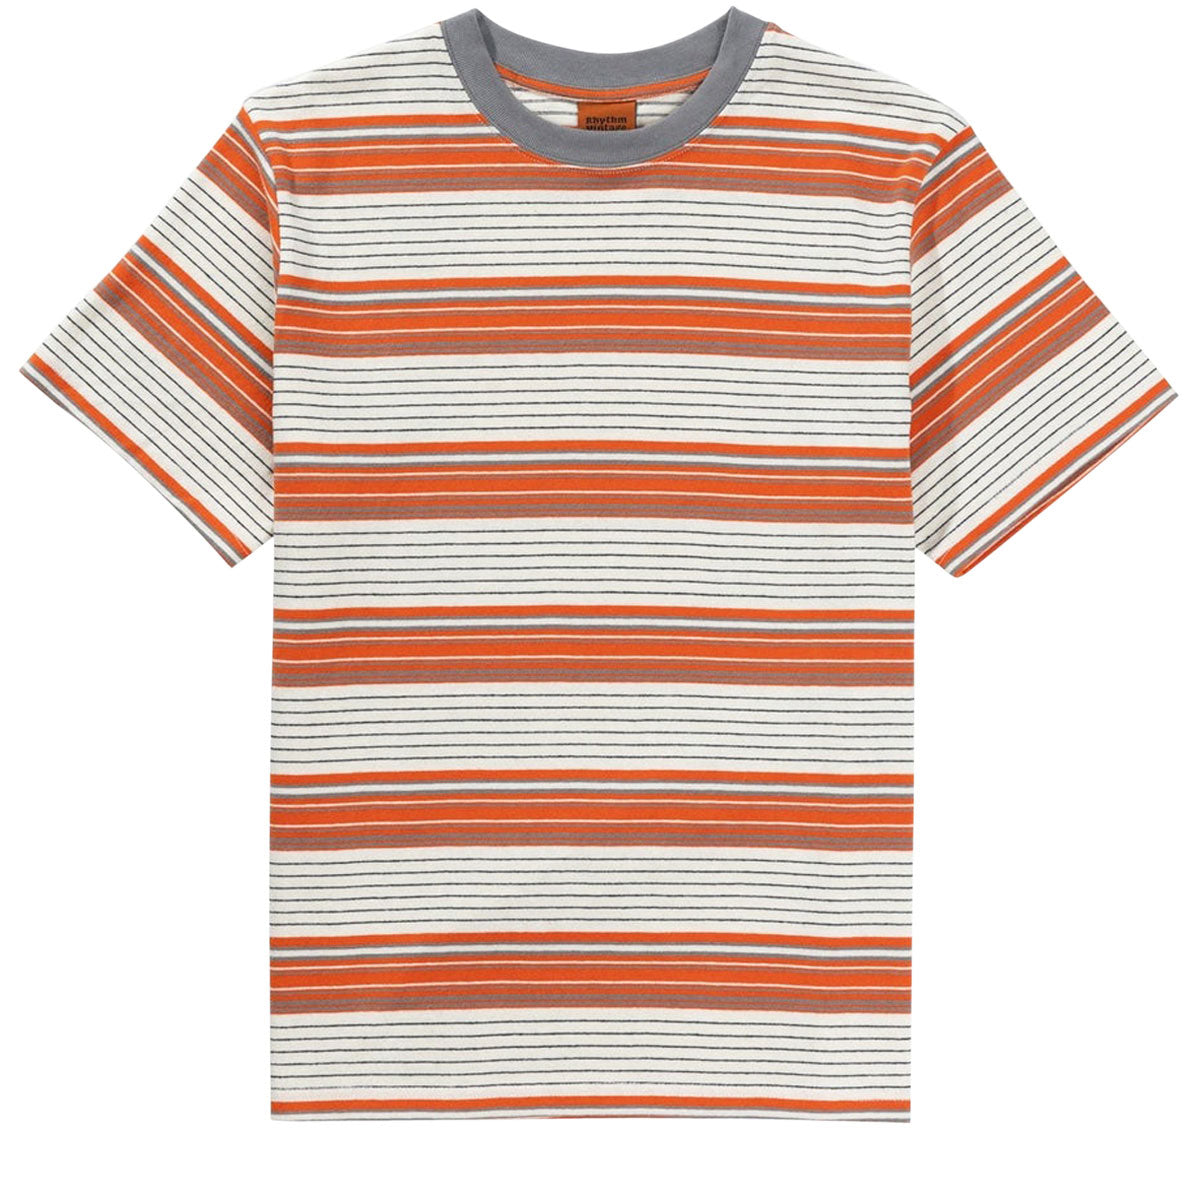 Rhythm Vintage Stripe T-Shirt - Natural image 1